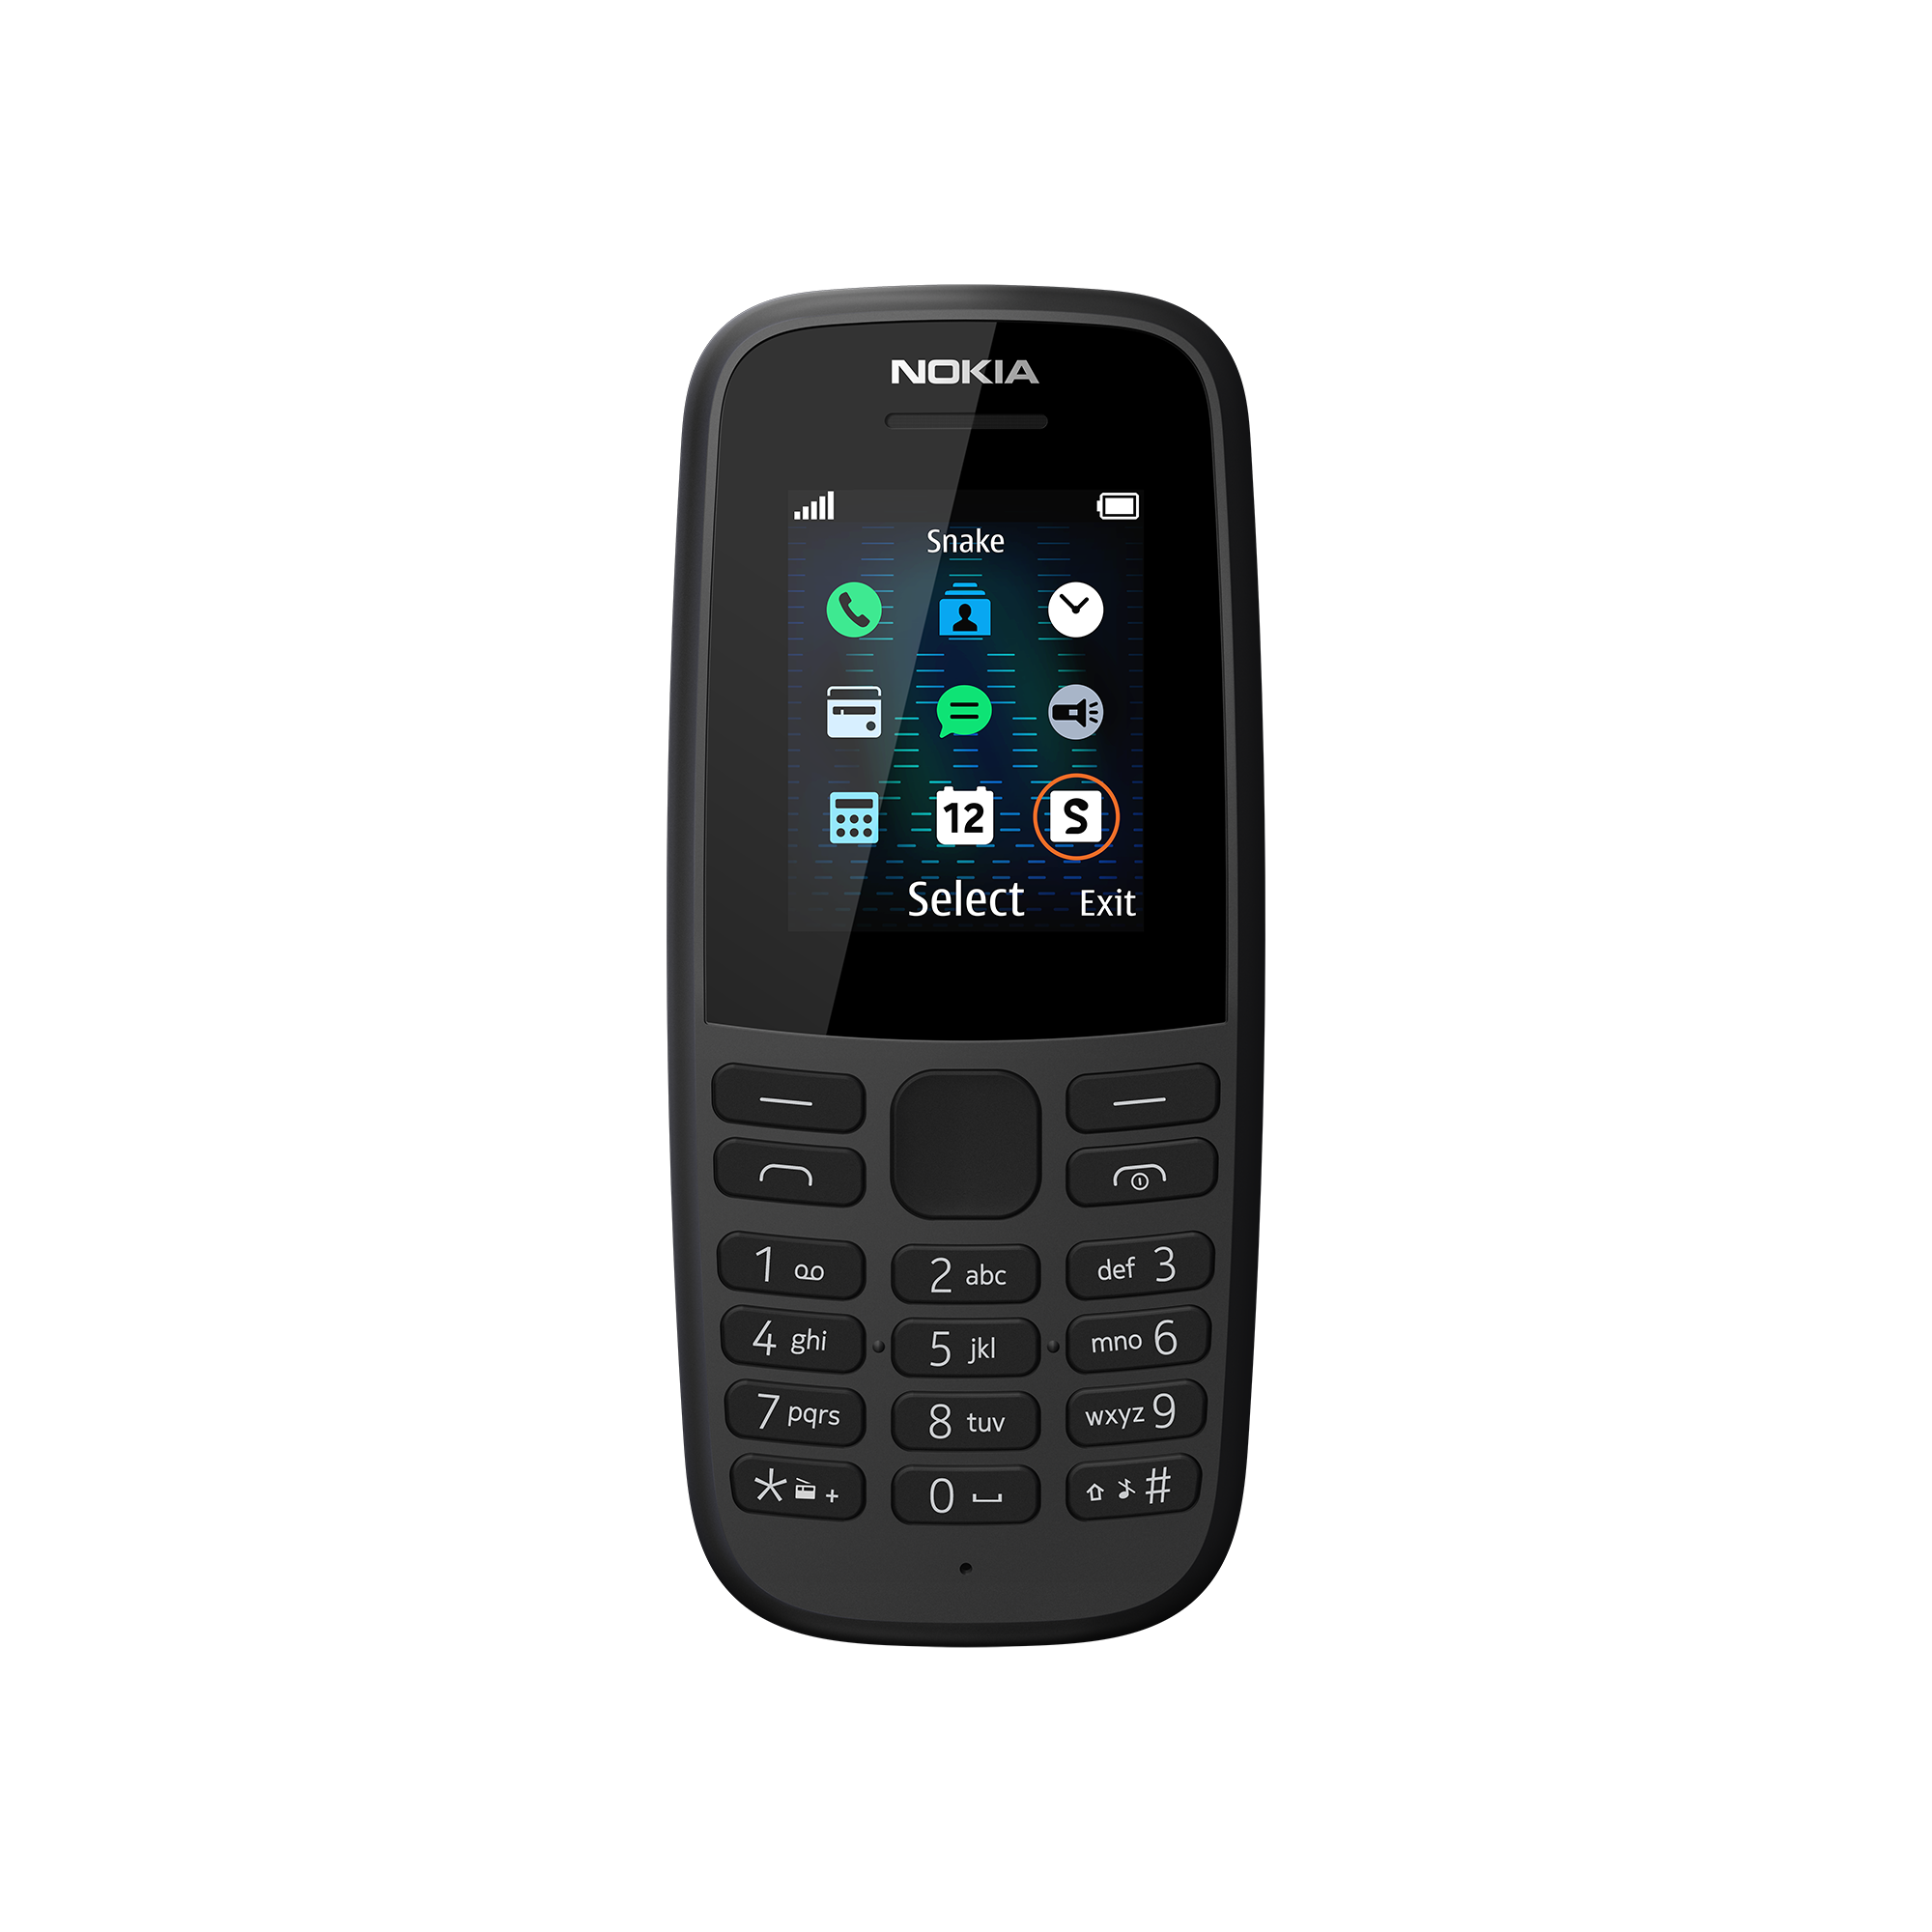 Nokia 105 - who needs it?